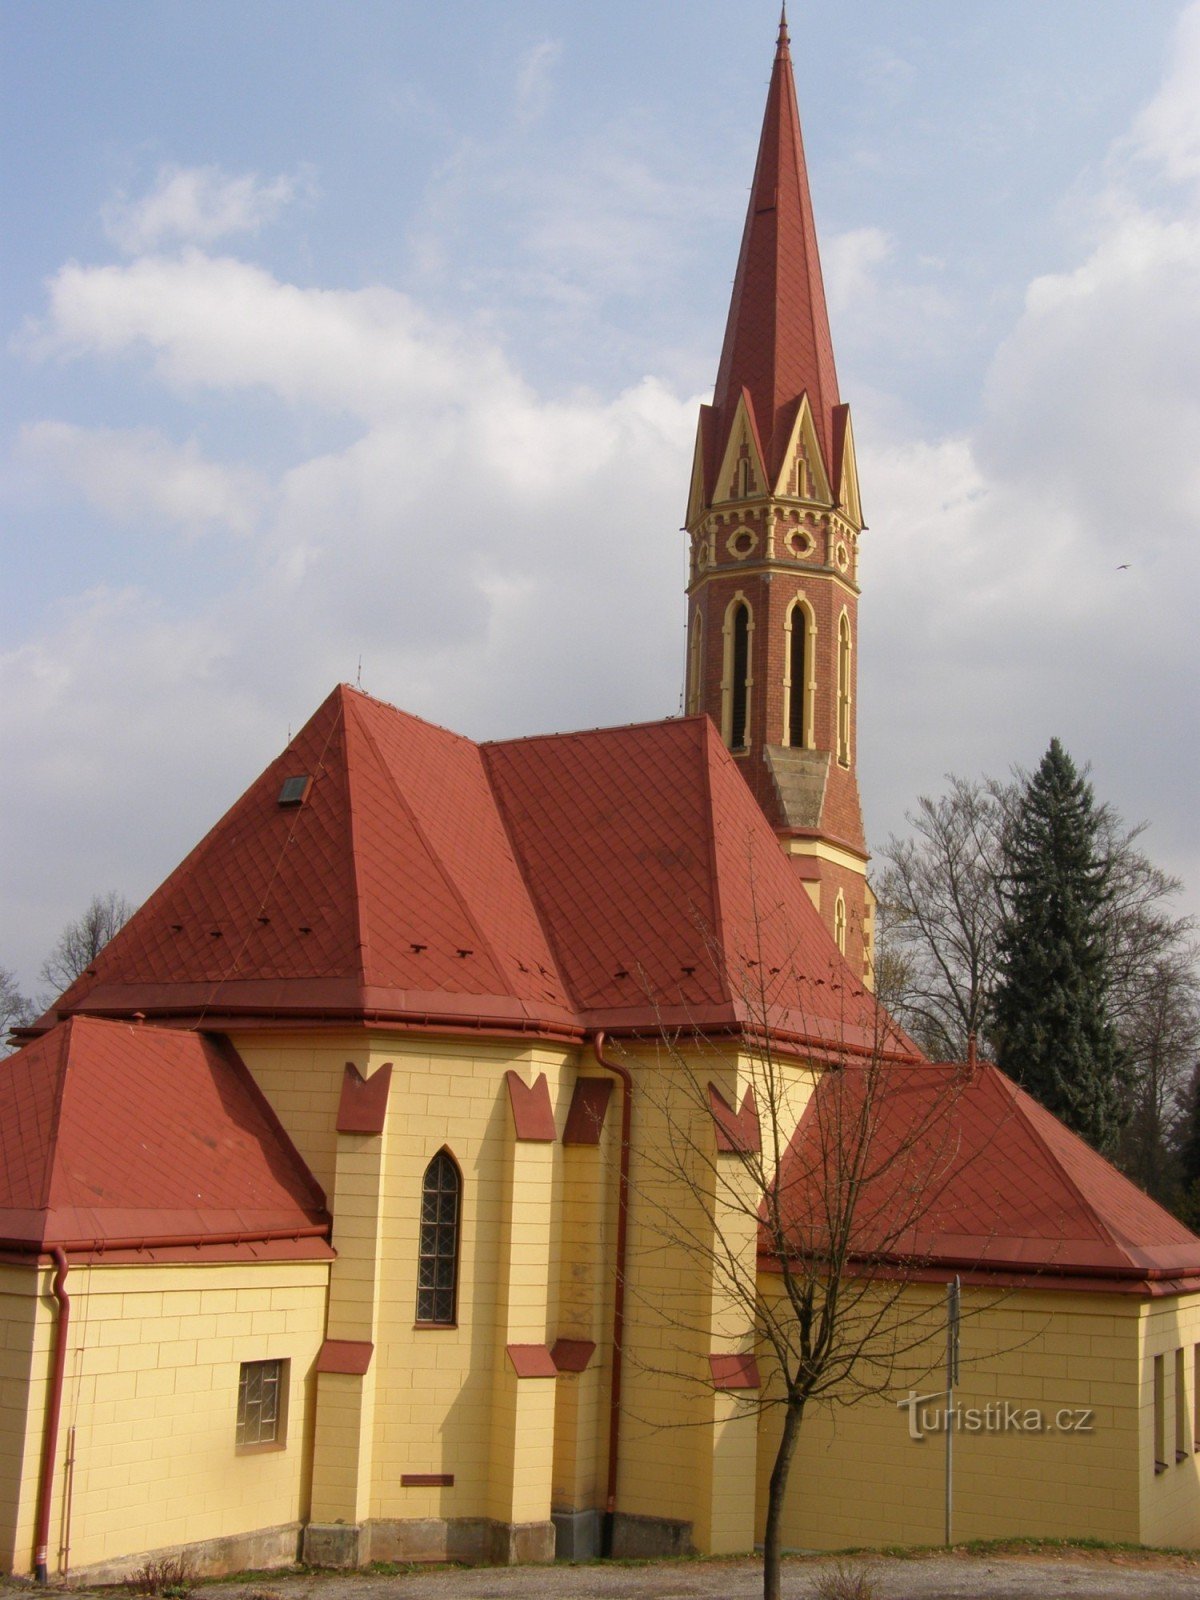 Trutnov - biserica evanghelică, sala lui Bohuslav Martinů